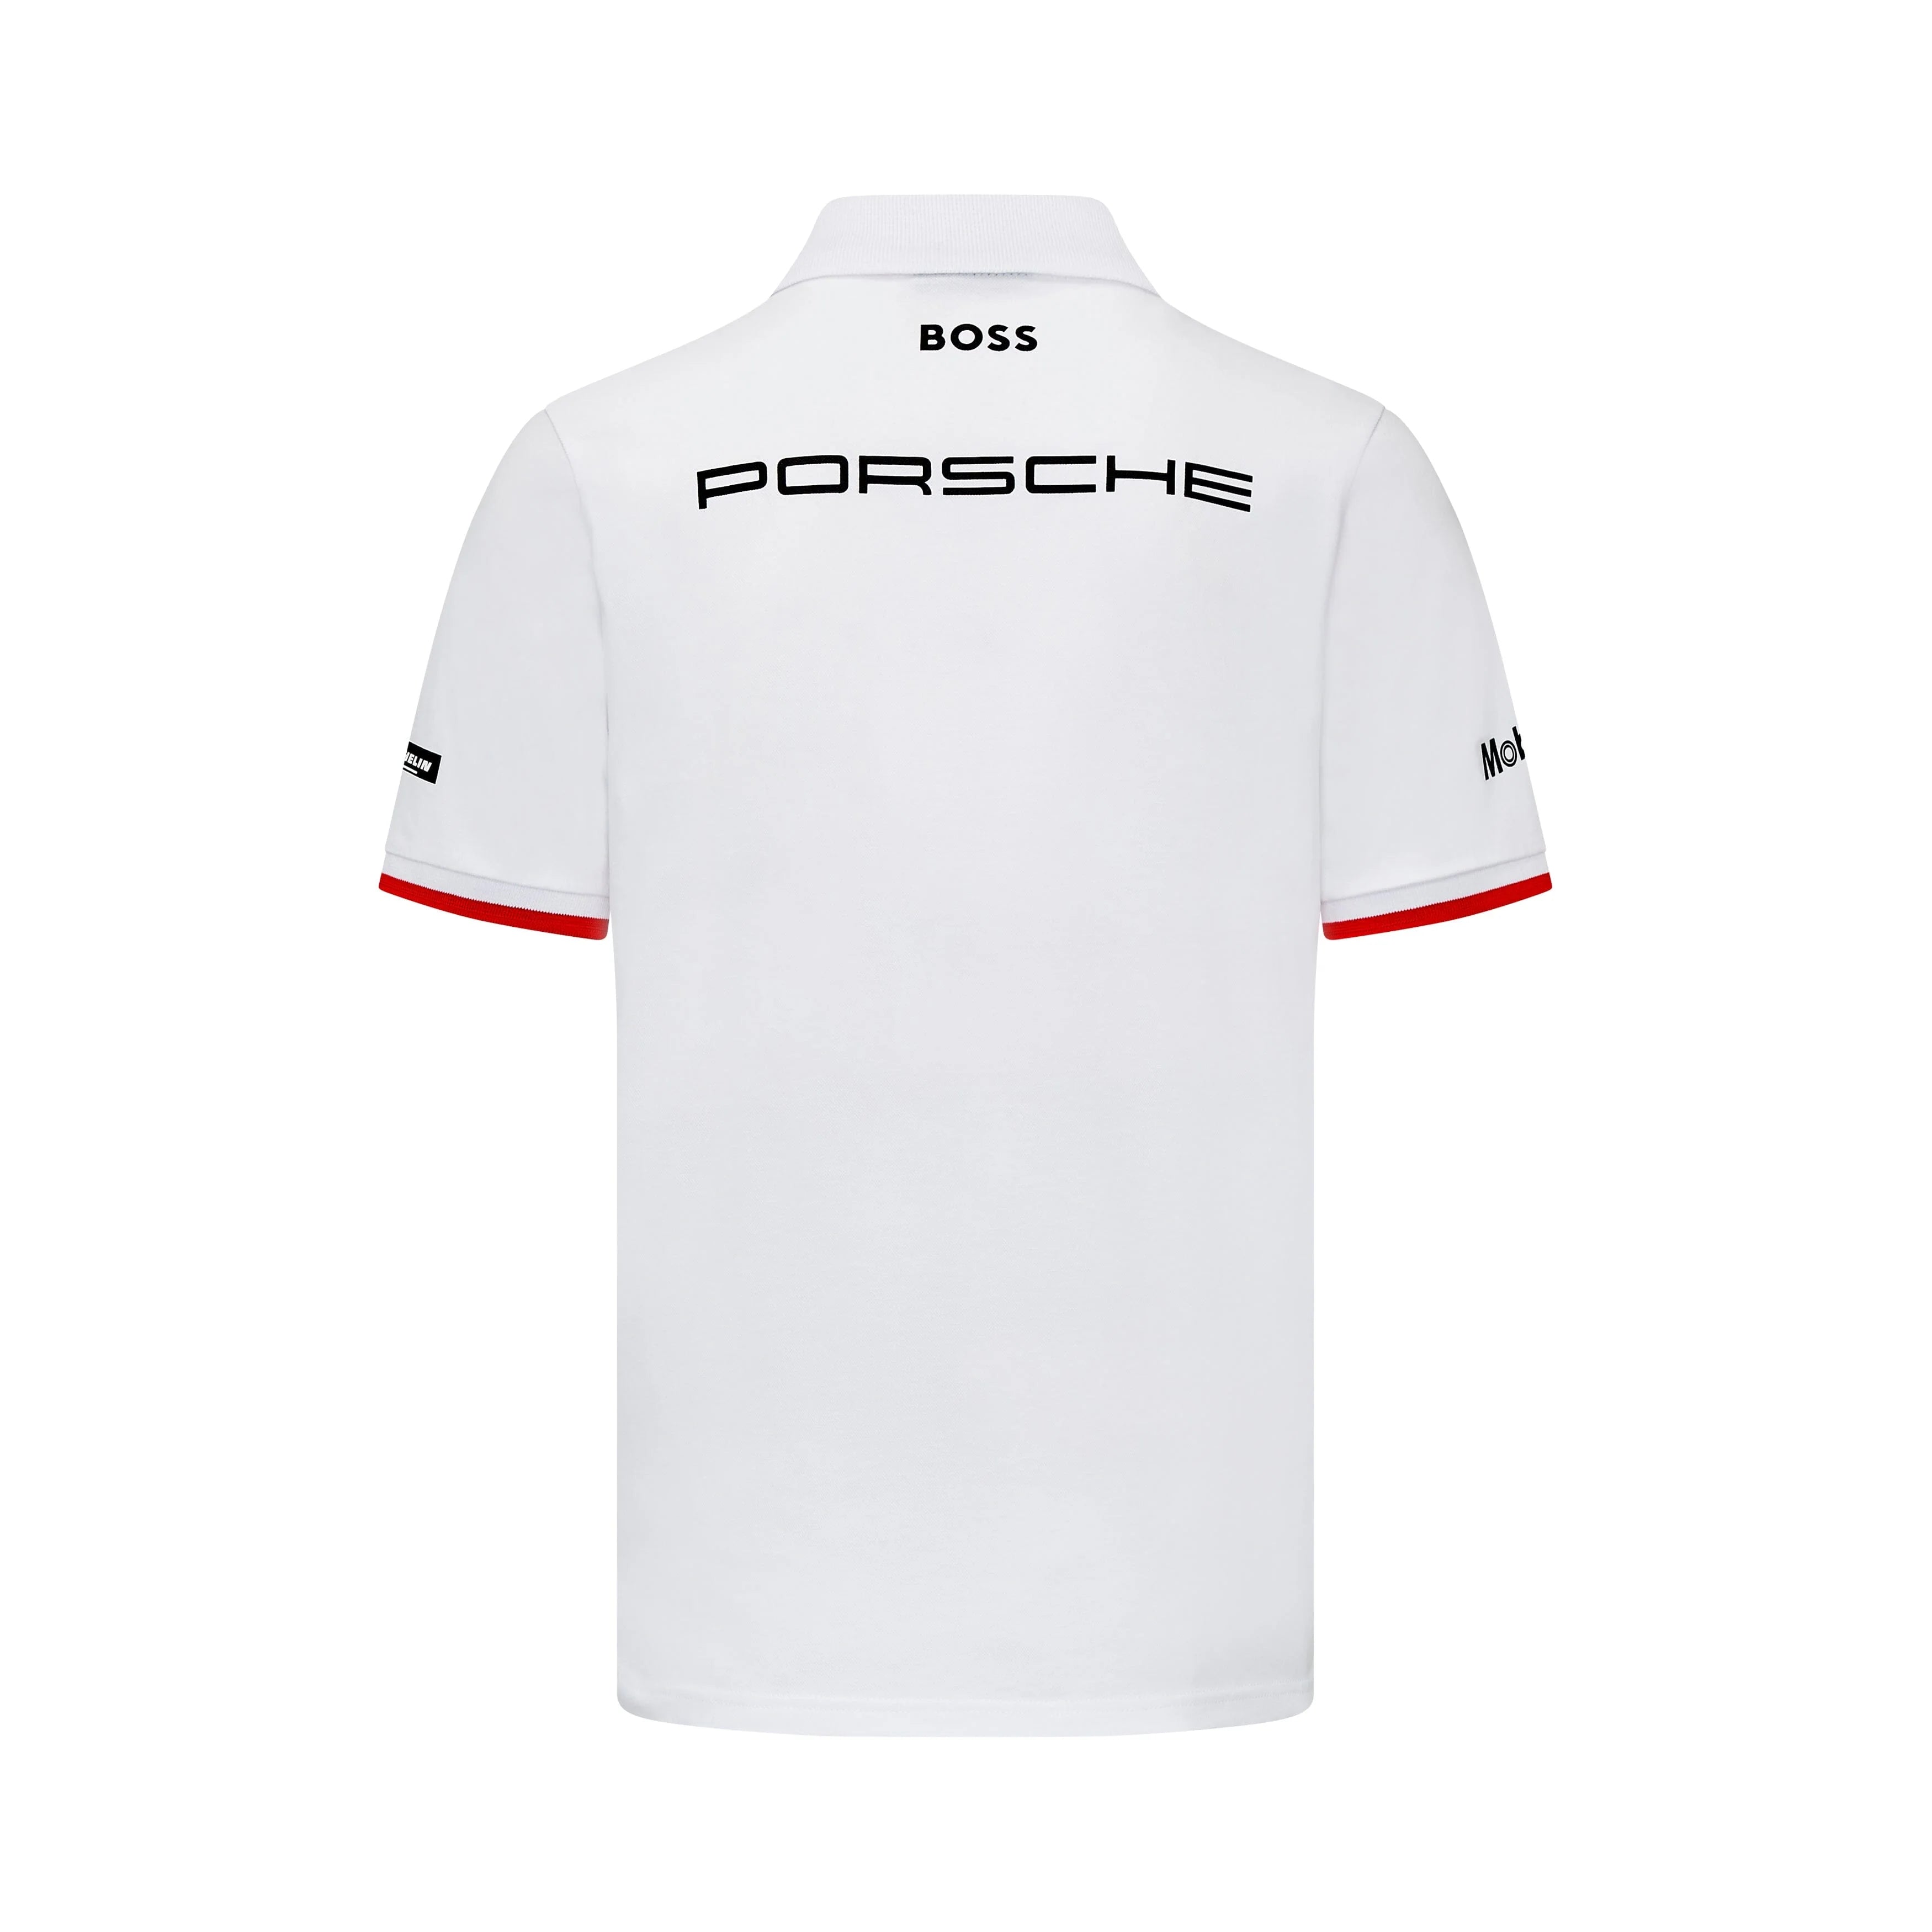 Porsche Motorsport Men's Team Polo Shirt White